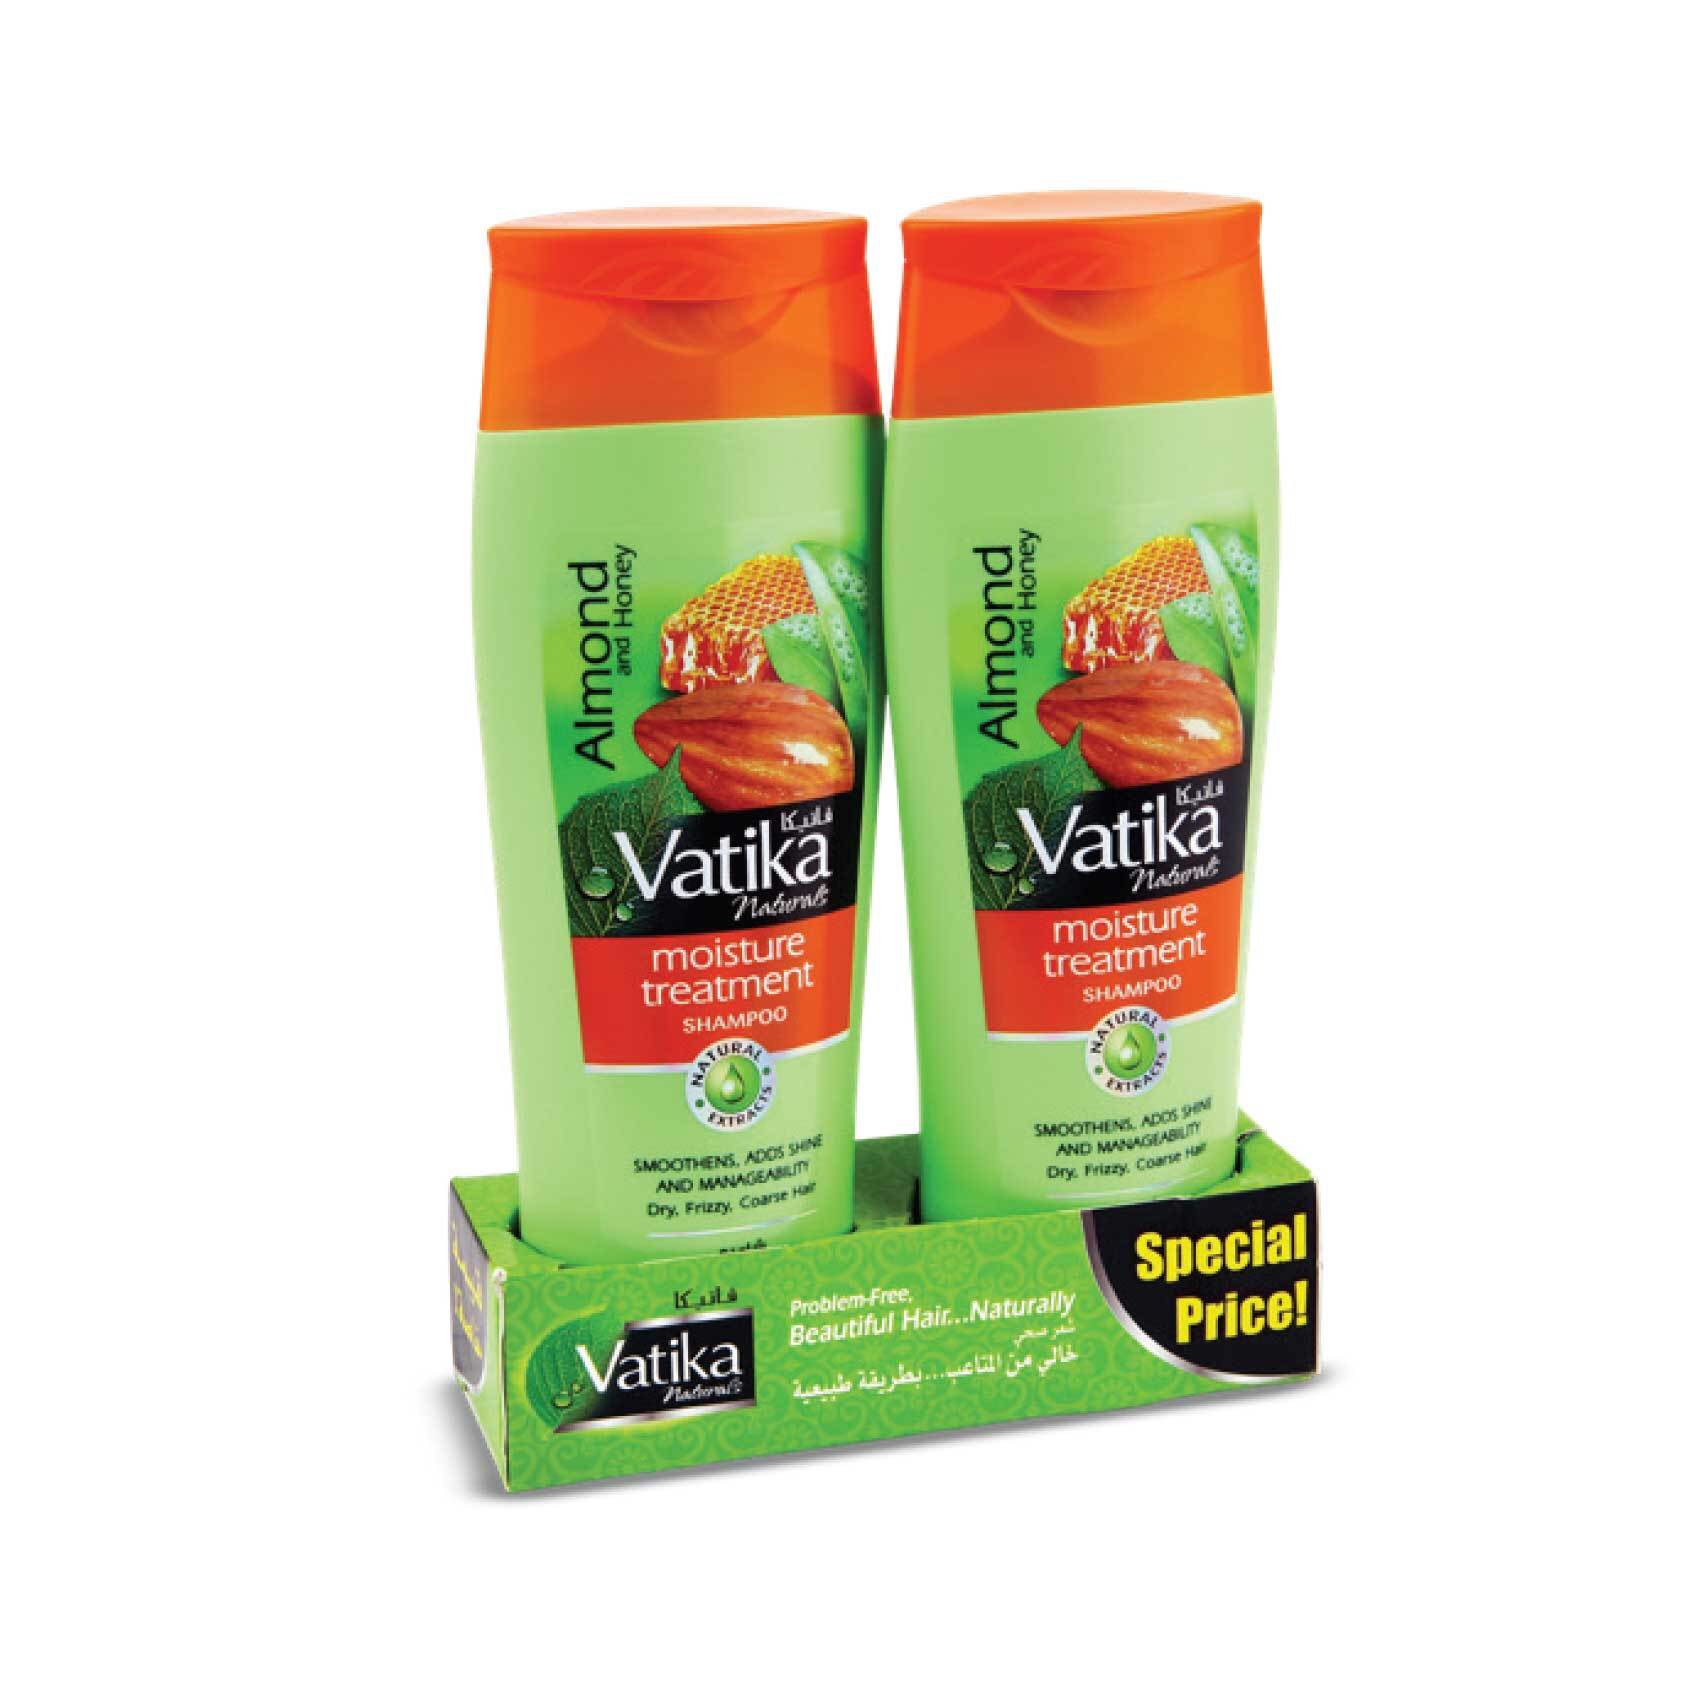 Vatika moisture treatment shampoo almond & honey 400 ml x 2 (CARGO)